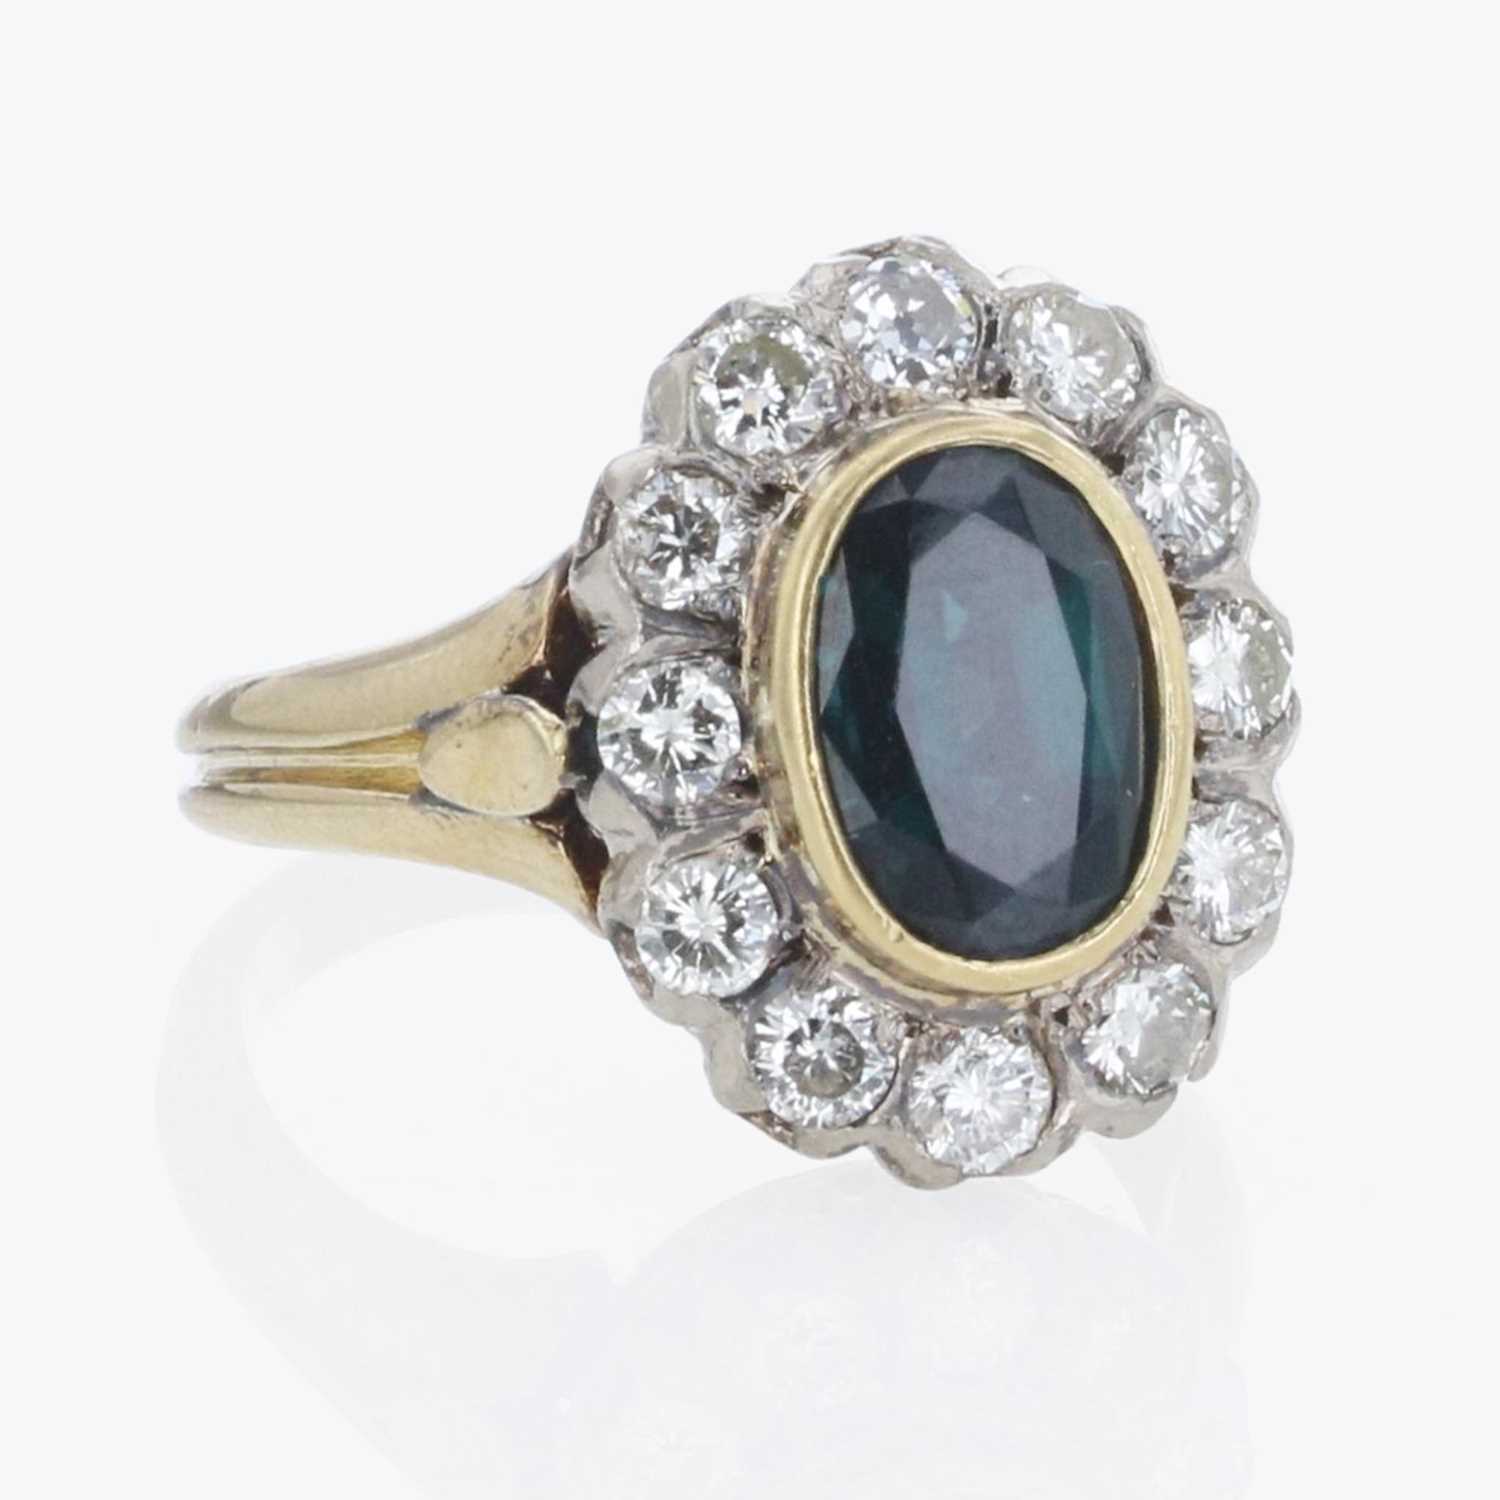 Lot 292 - 18K Yellow Gold, Sapphire, and Diamond Ring